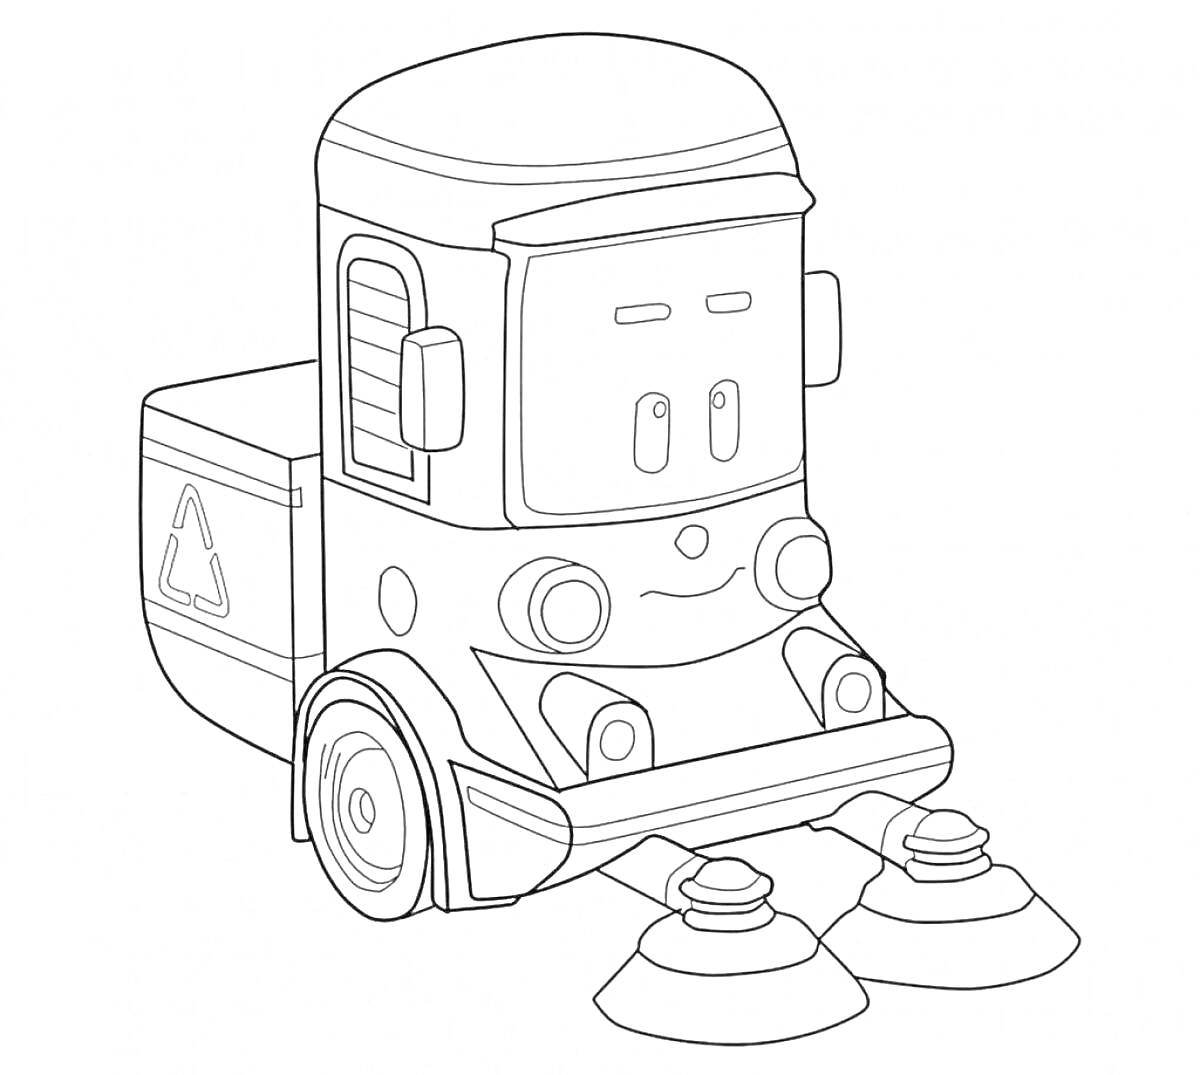 Раскраска Робокар с двумя щетками для уборки